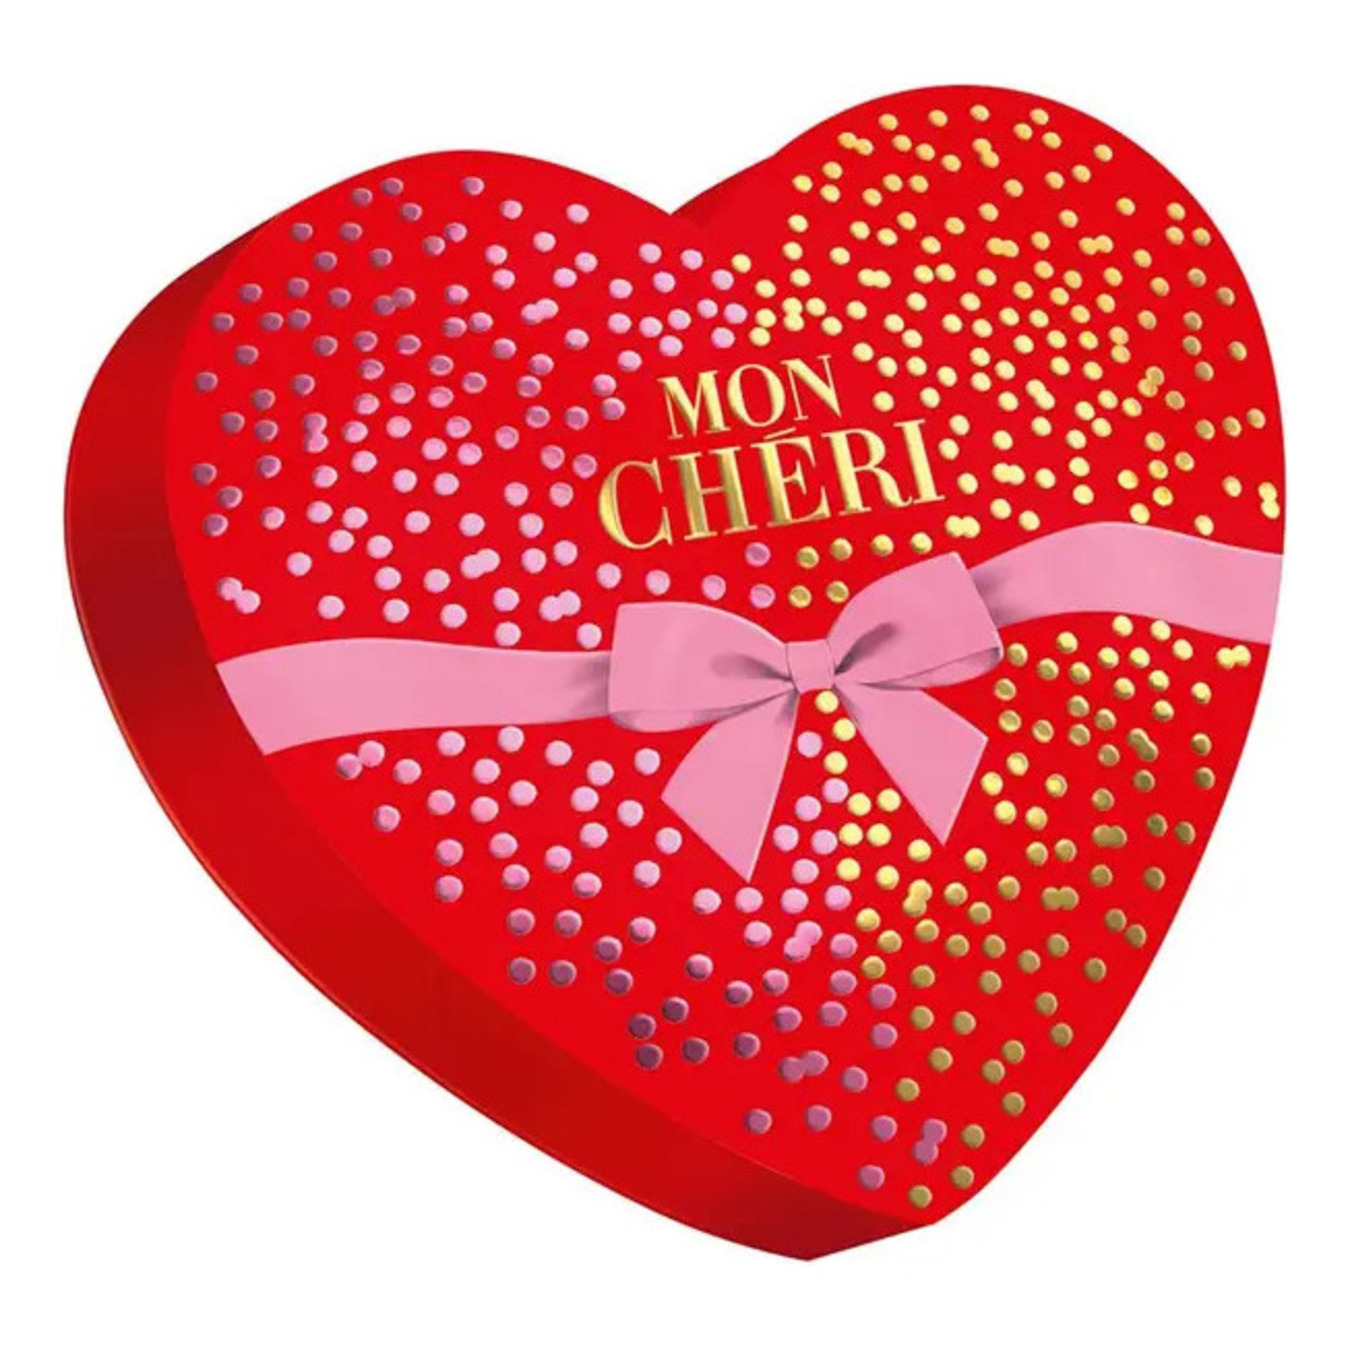 A set of Ferrero MON CHERI candies 147g